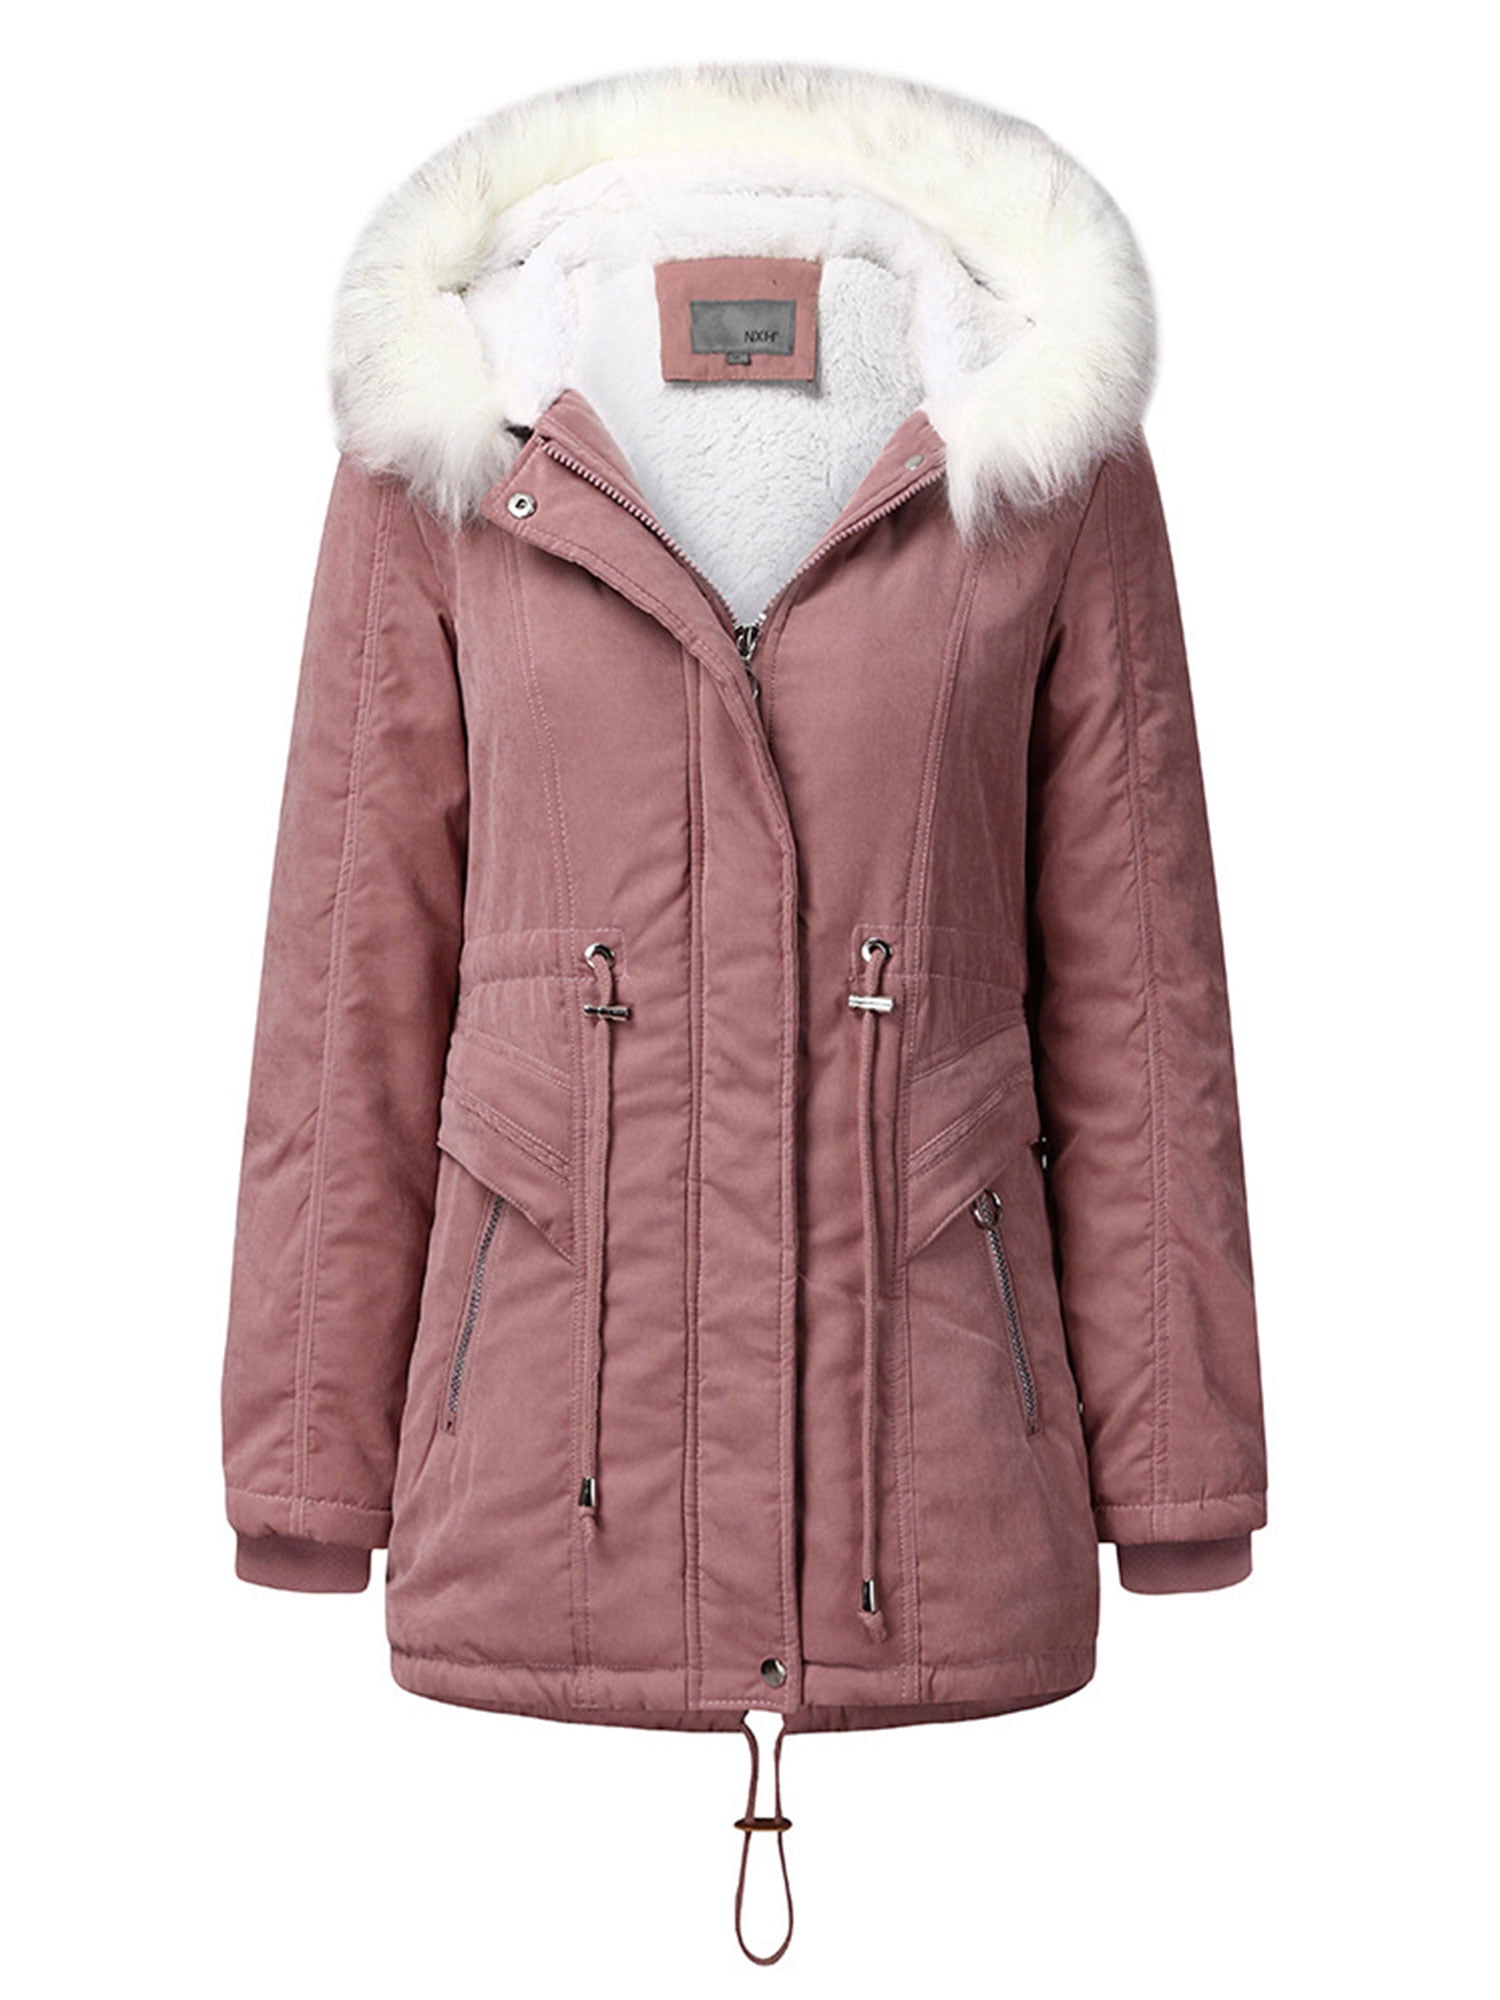 Kid's Coats Winter Black Jacket Faux Fur Parka Casual Hooded Warm Trench Outwear